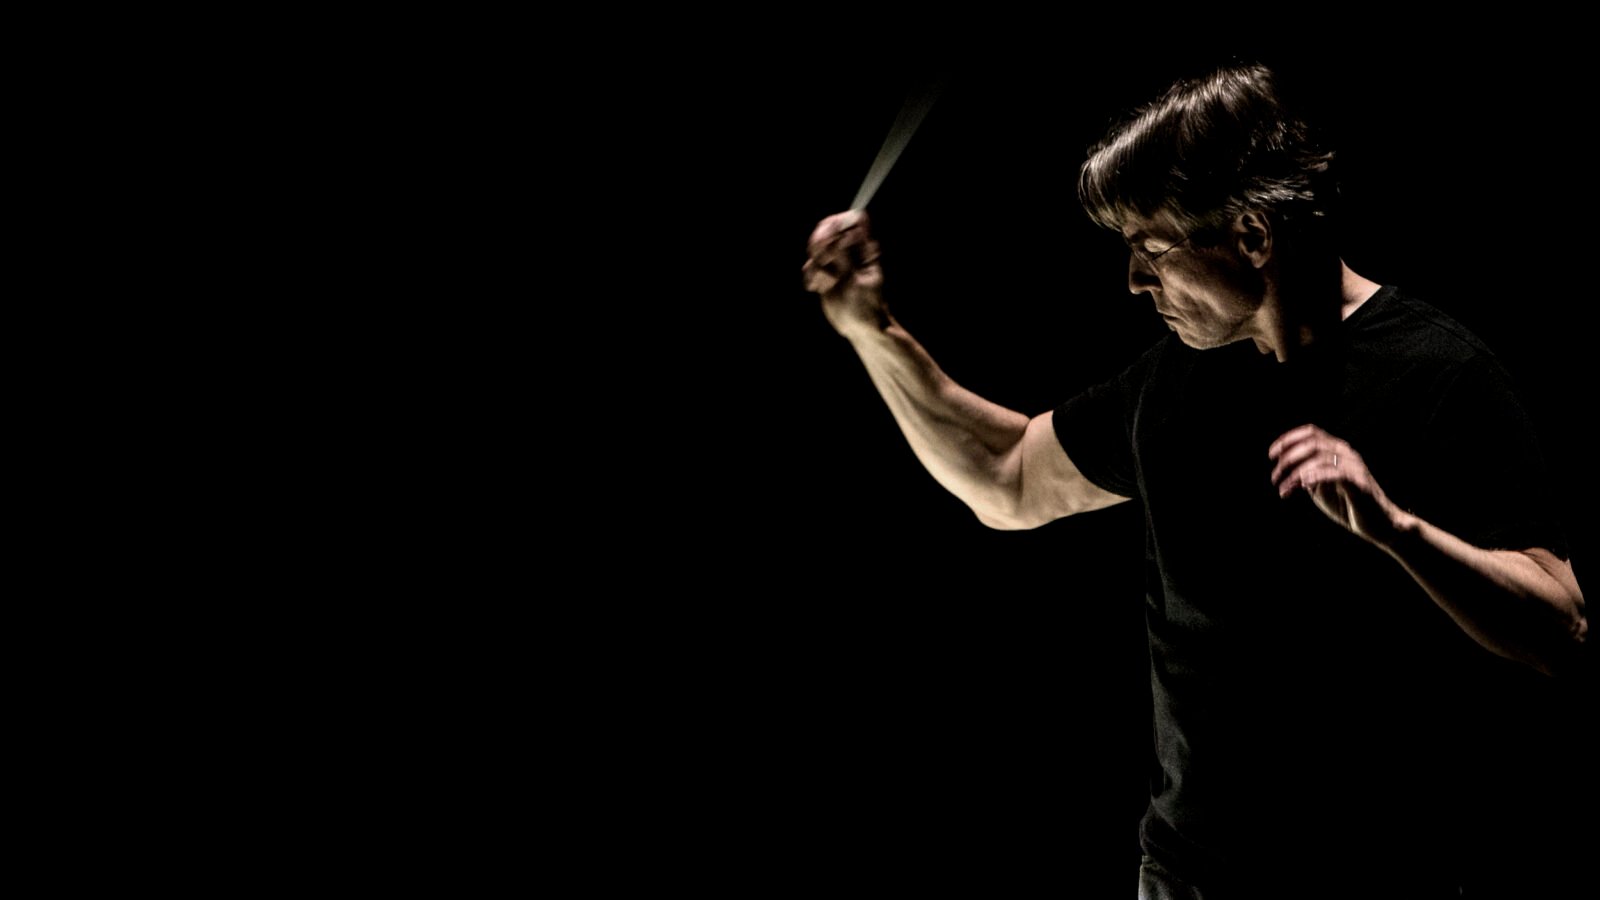 Esa-Pekka Salonen conducting in moody, darkly lit photo